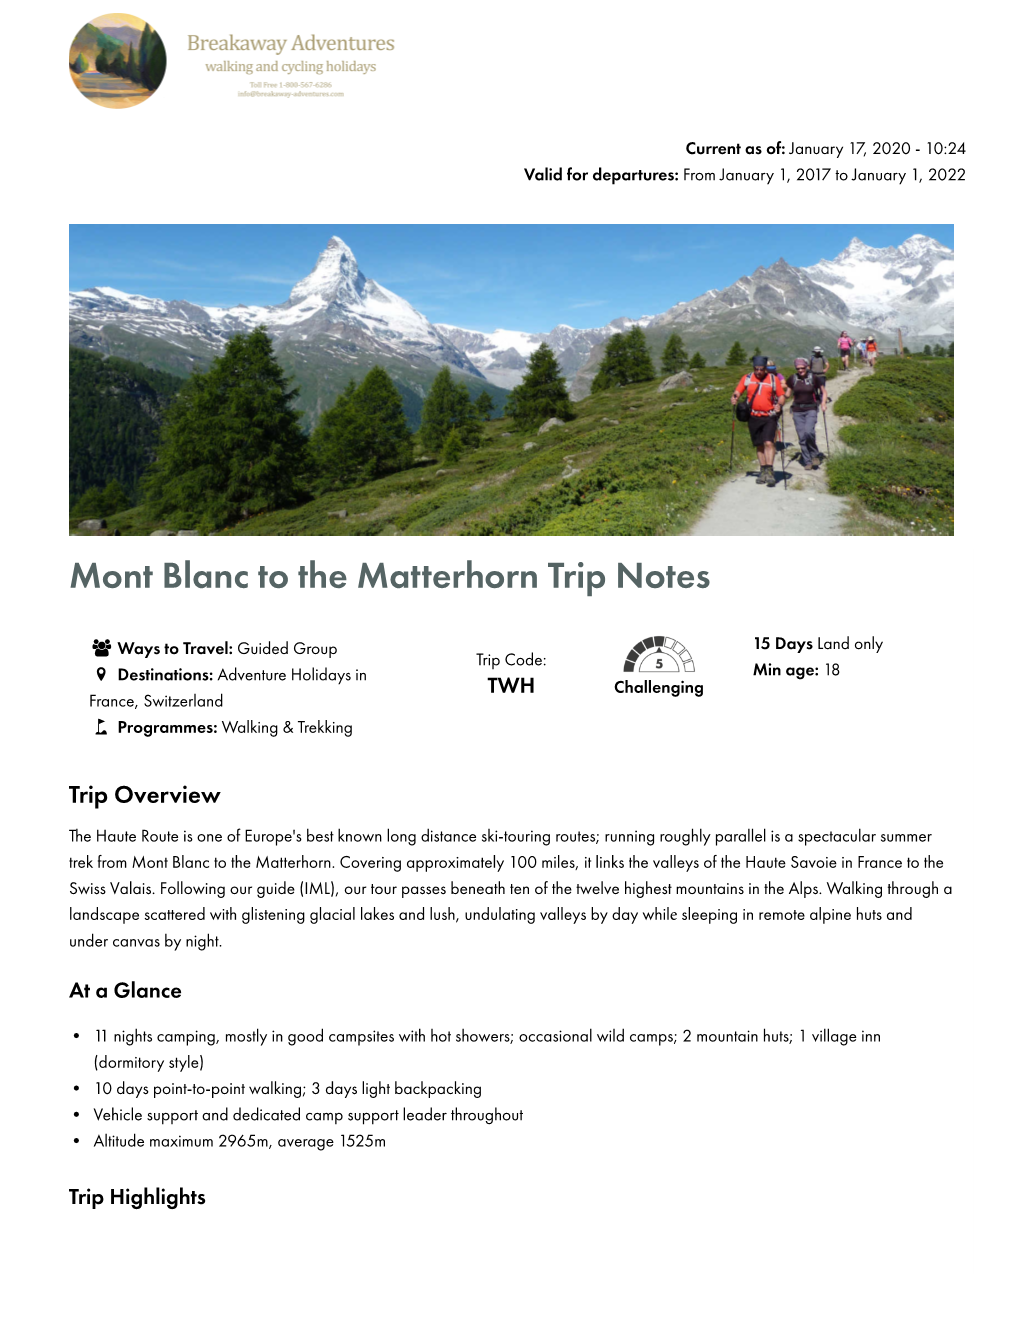 Mont Blanc to the Matterhorn Trip Notes